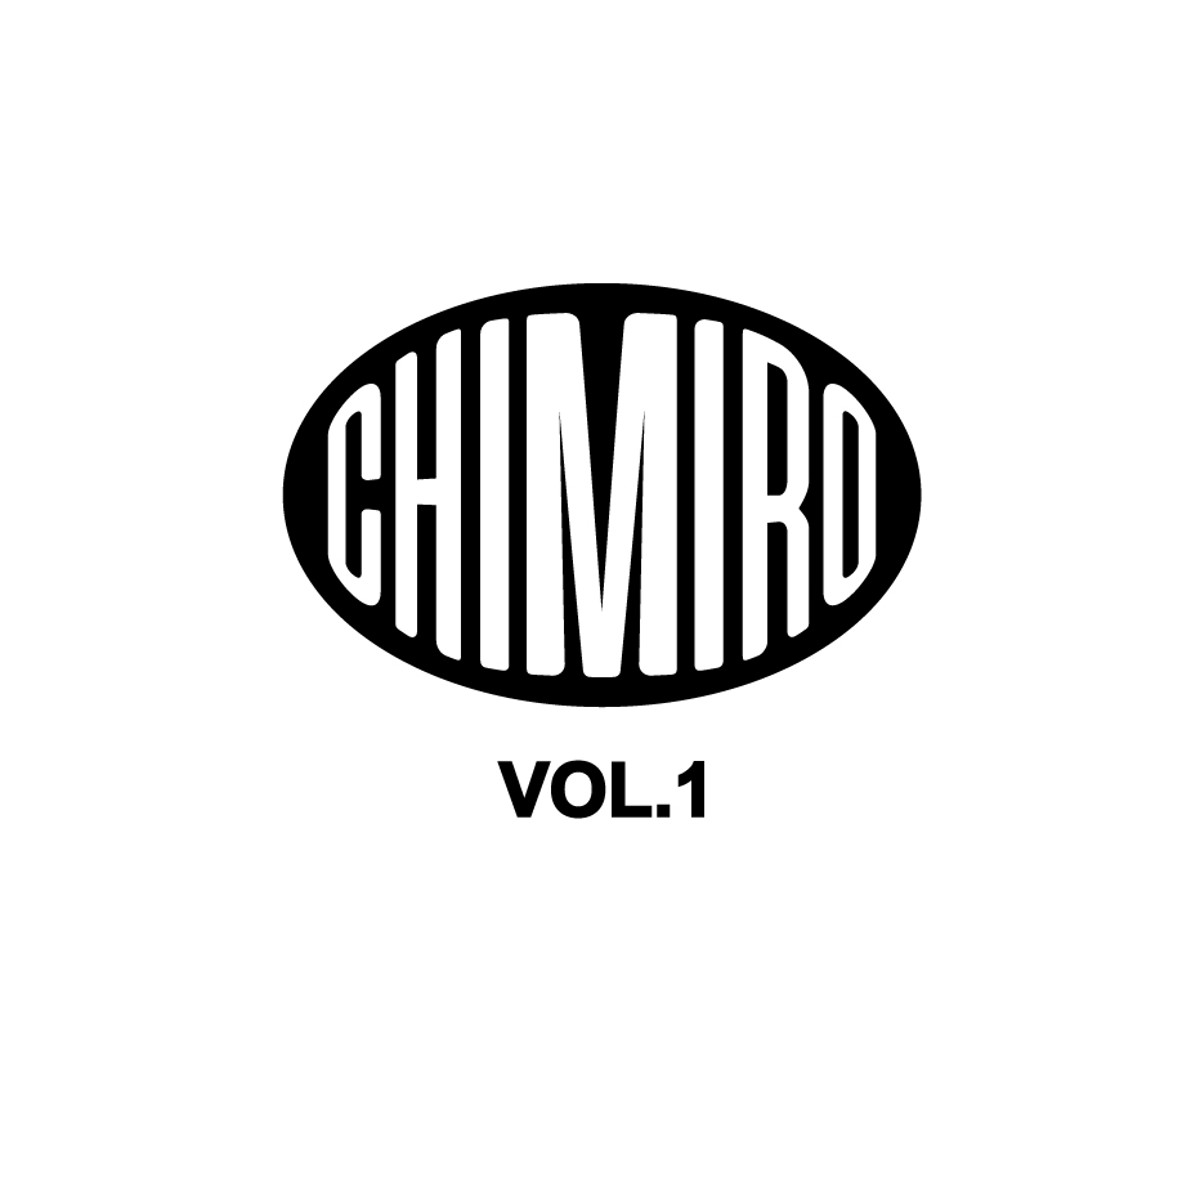 「CHIMIRO VOL 1」